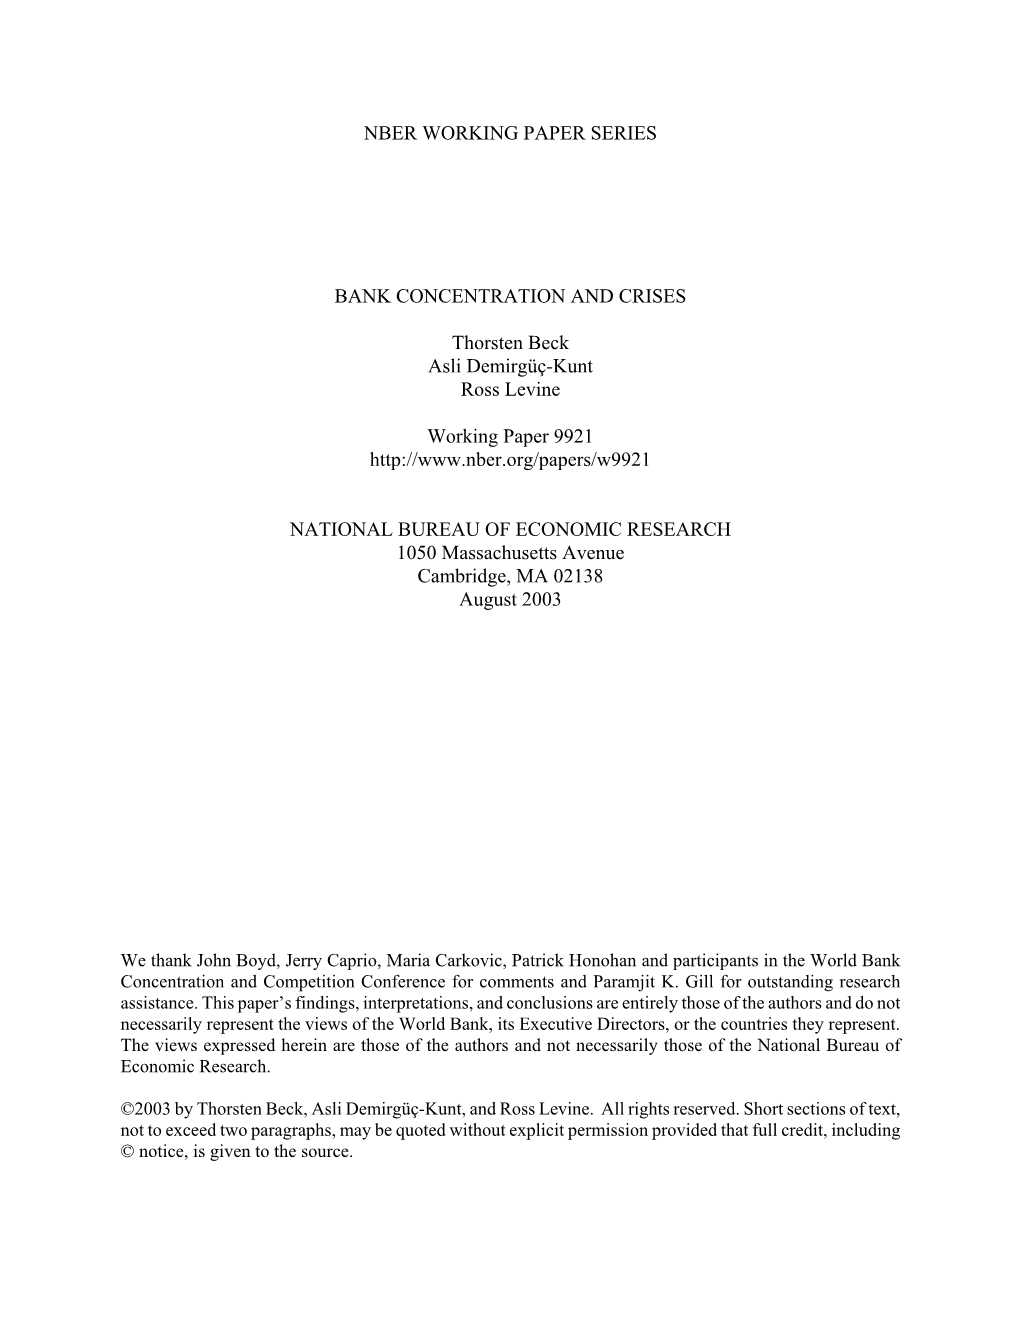 NBER WORKING PAPER SERIES BANK CONCENTRATION and CRISES Thorsten Beck Asli Demirgüç-Kunt Ross Levine Working Paper 9921 Http